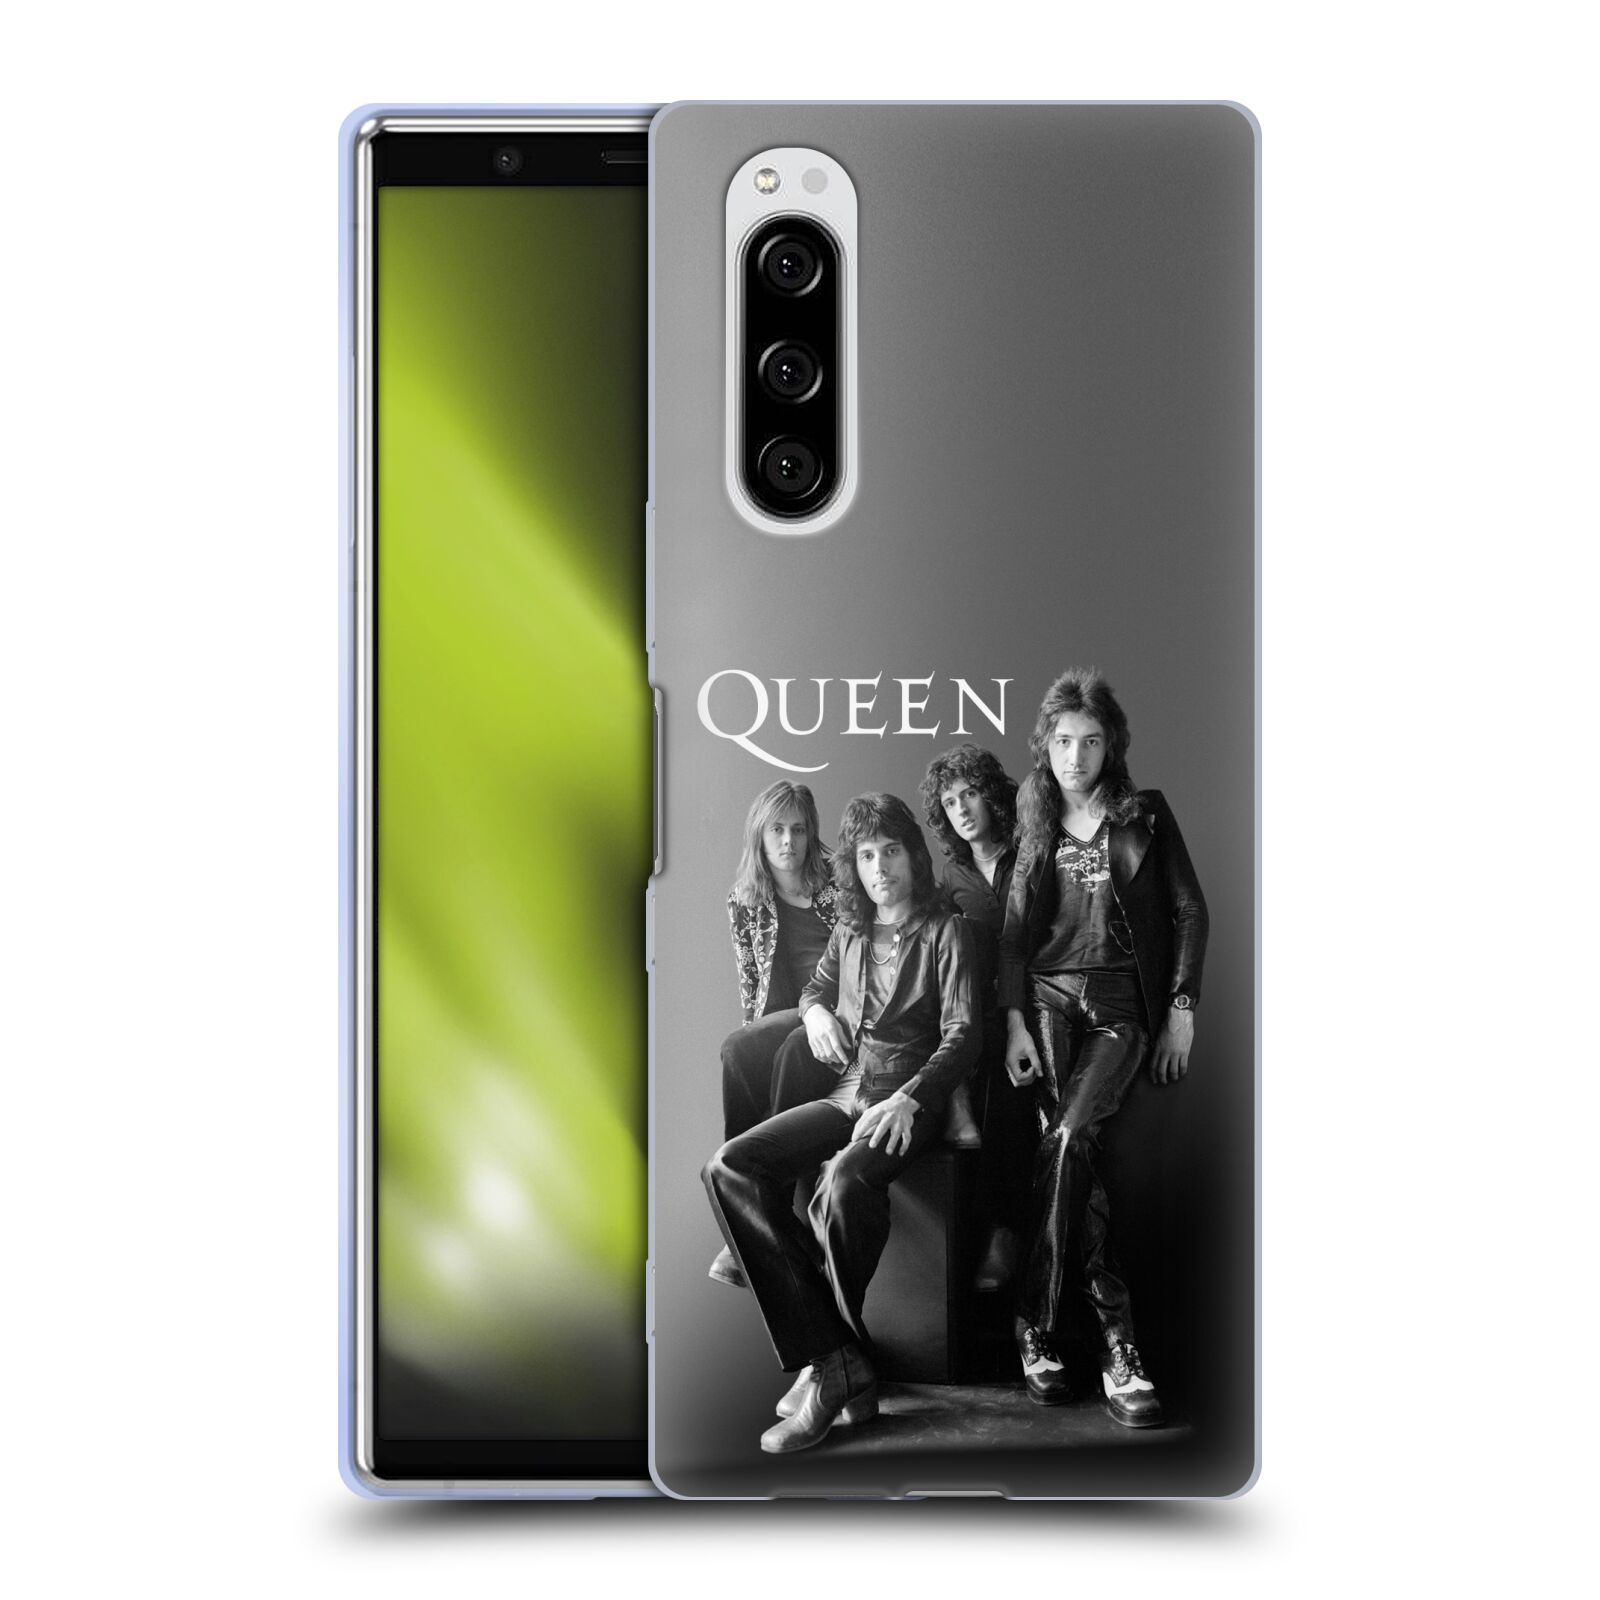 Silikonové pouzdro na mobil Sony Xperia 5 - Head Case - Queen - Skupina